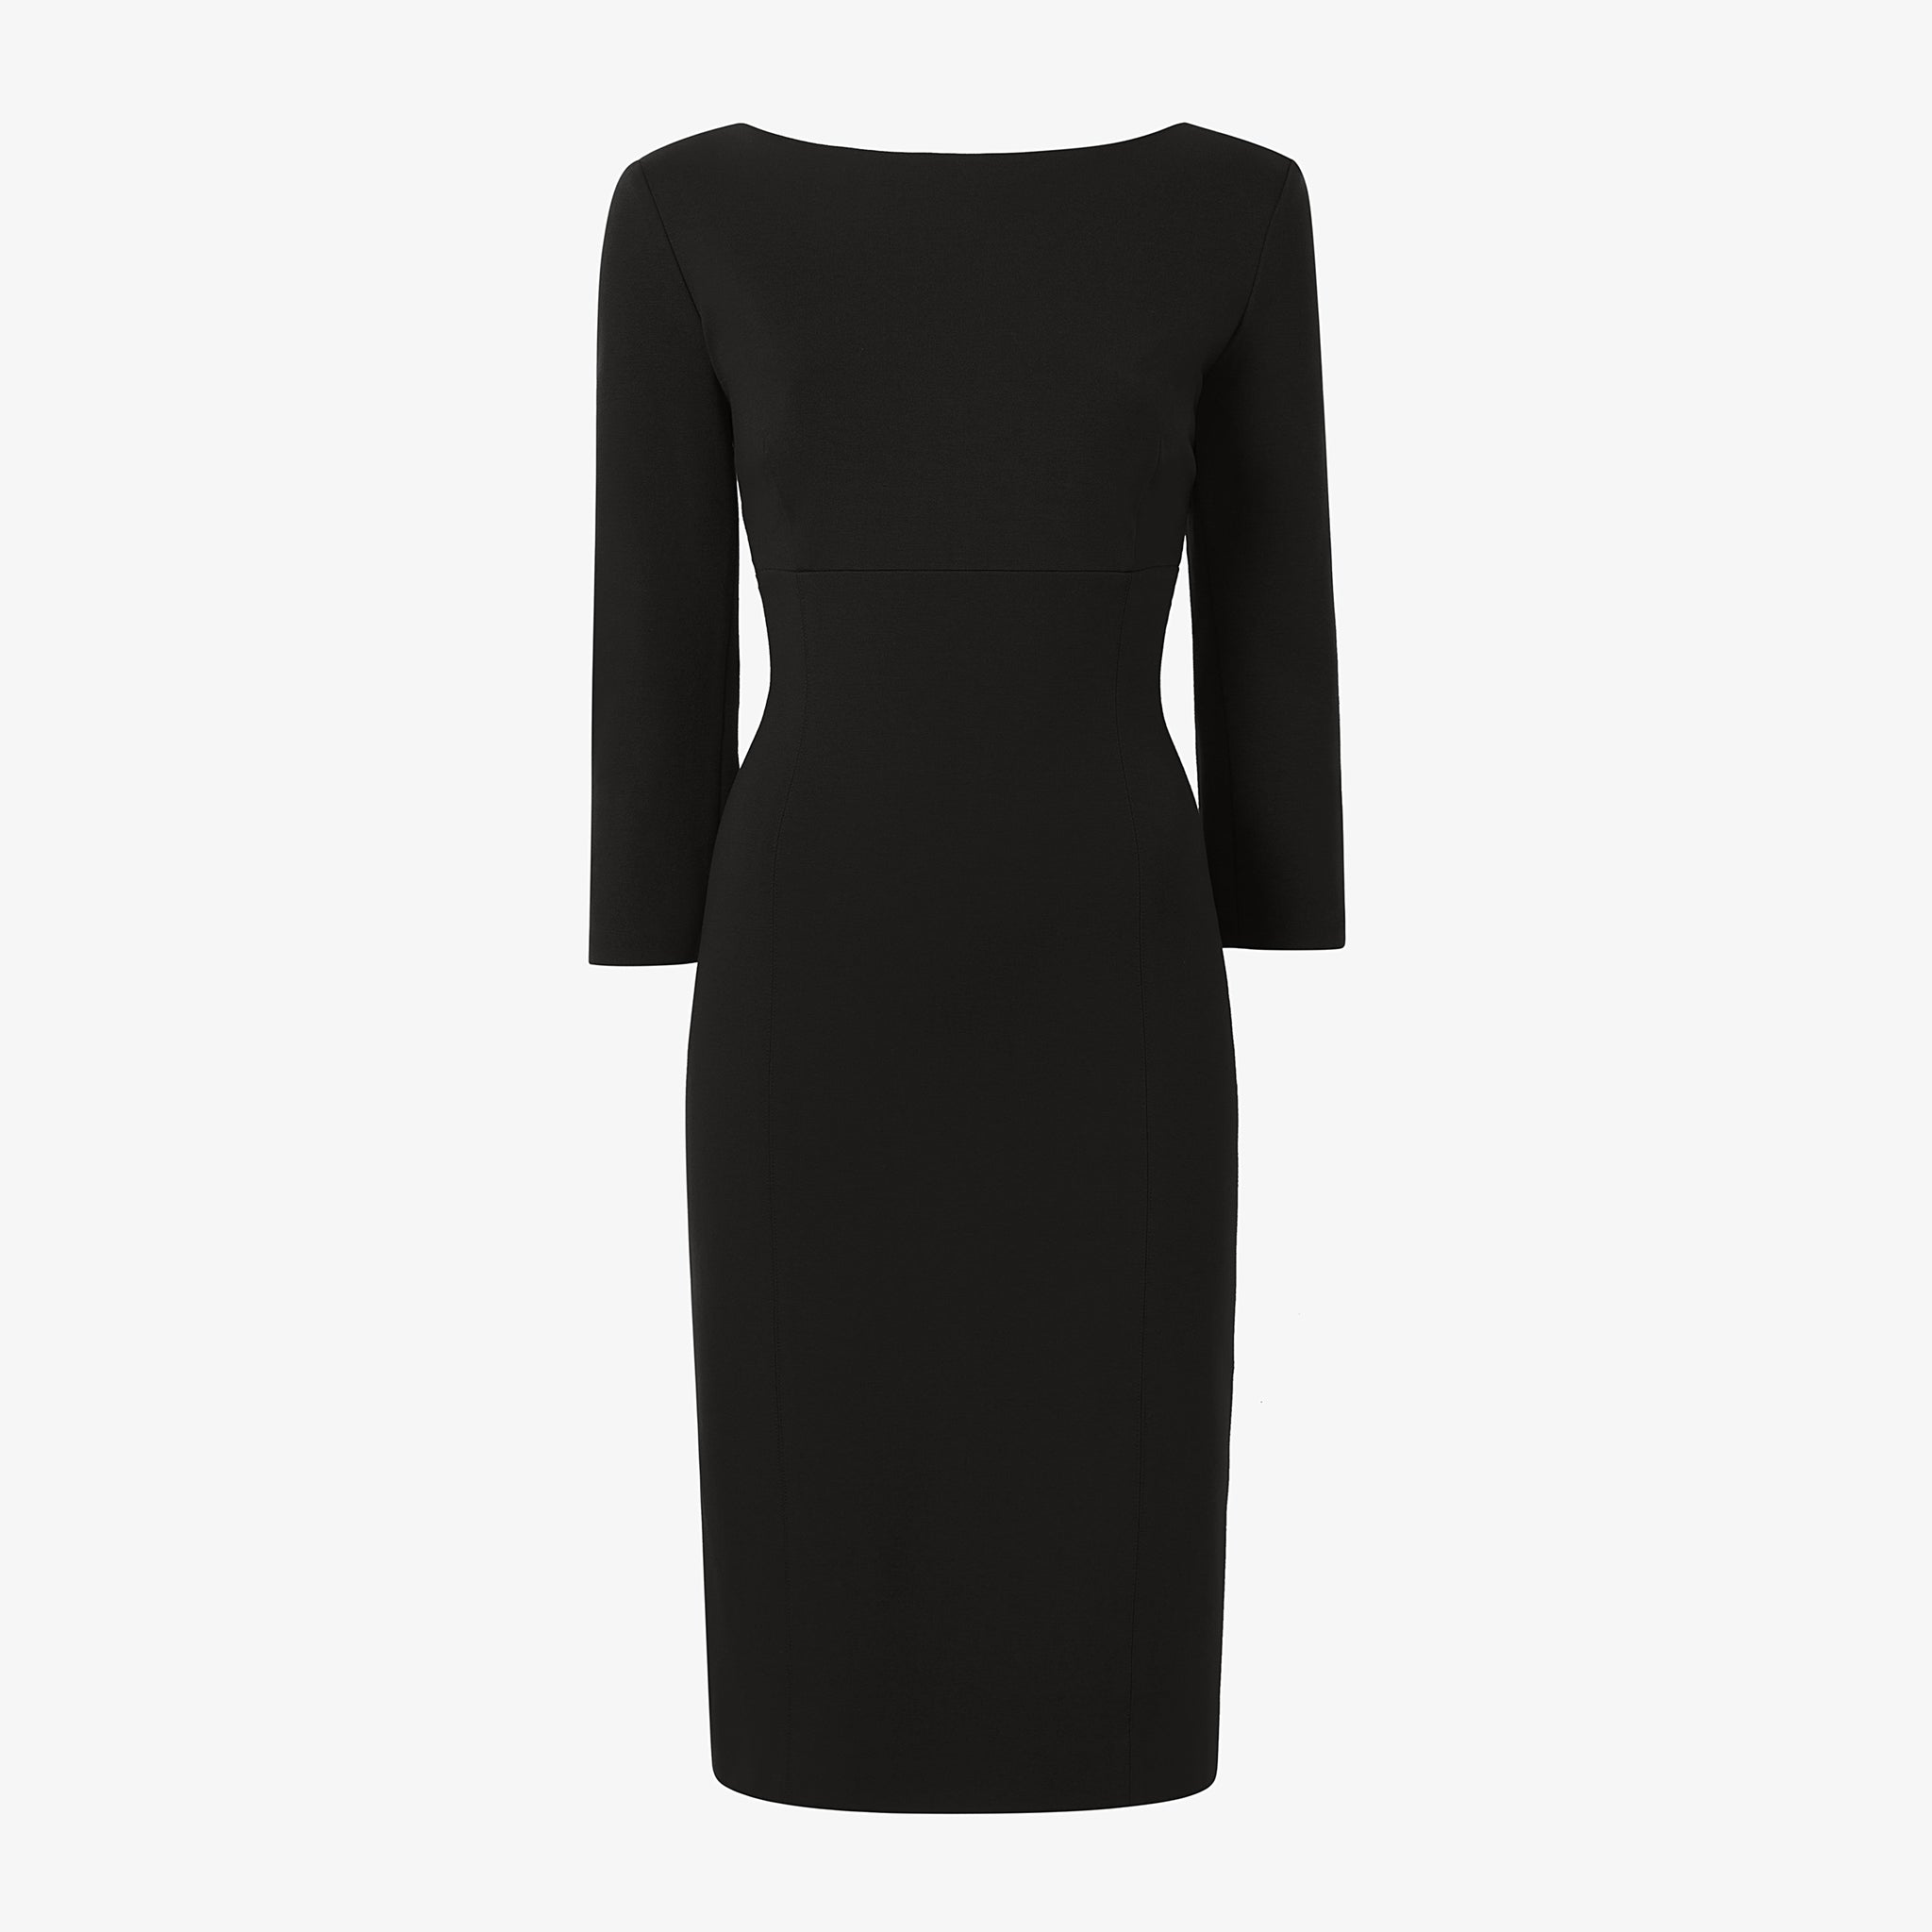 Packshot image of the Winston dress in black